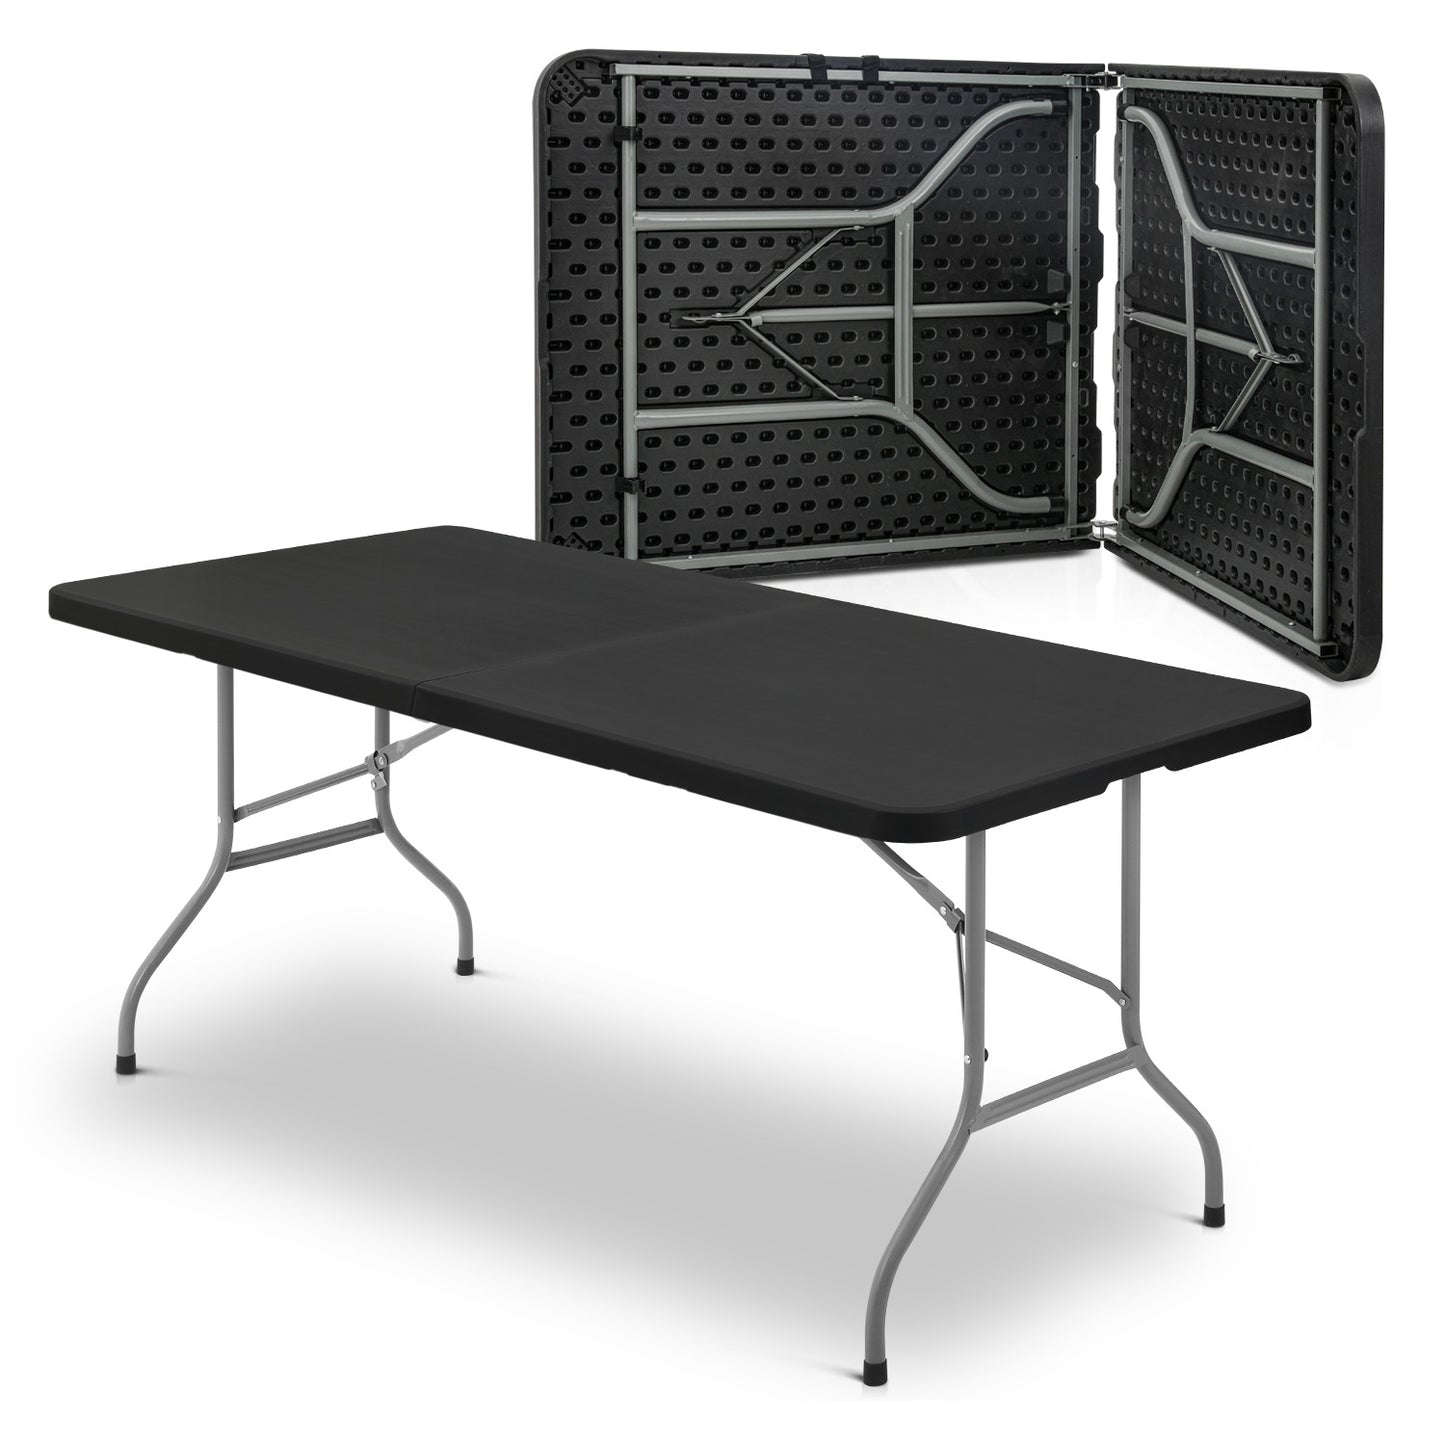 Rectangular 72" Foldable Table